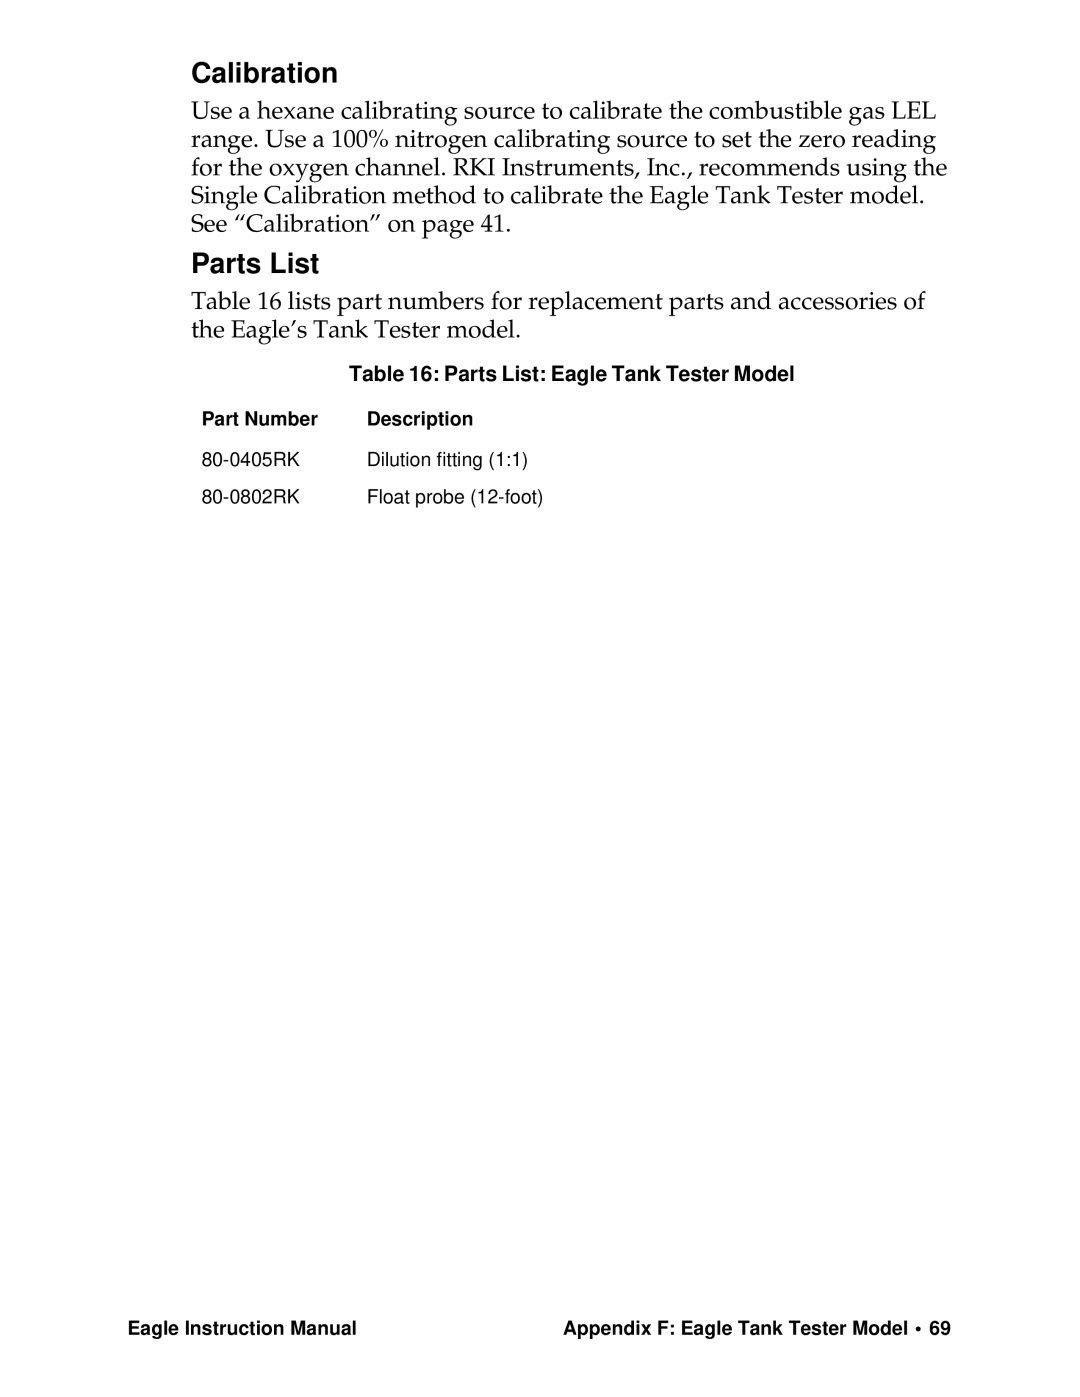 Eagle Home Products Eagle Series instruction manual Calibration, Parts List Eagle Tank Tester Model 